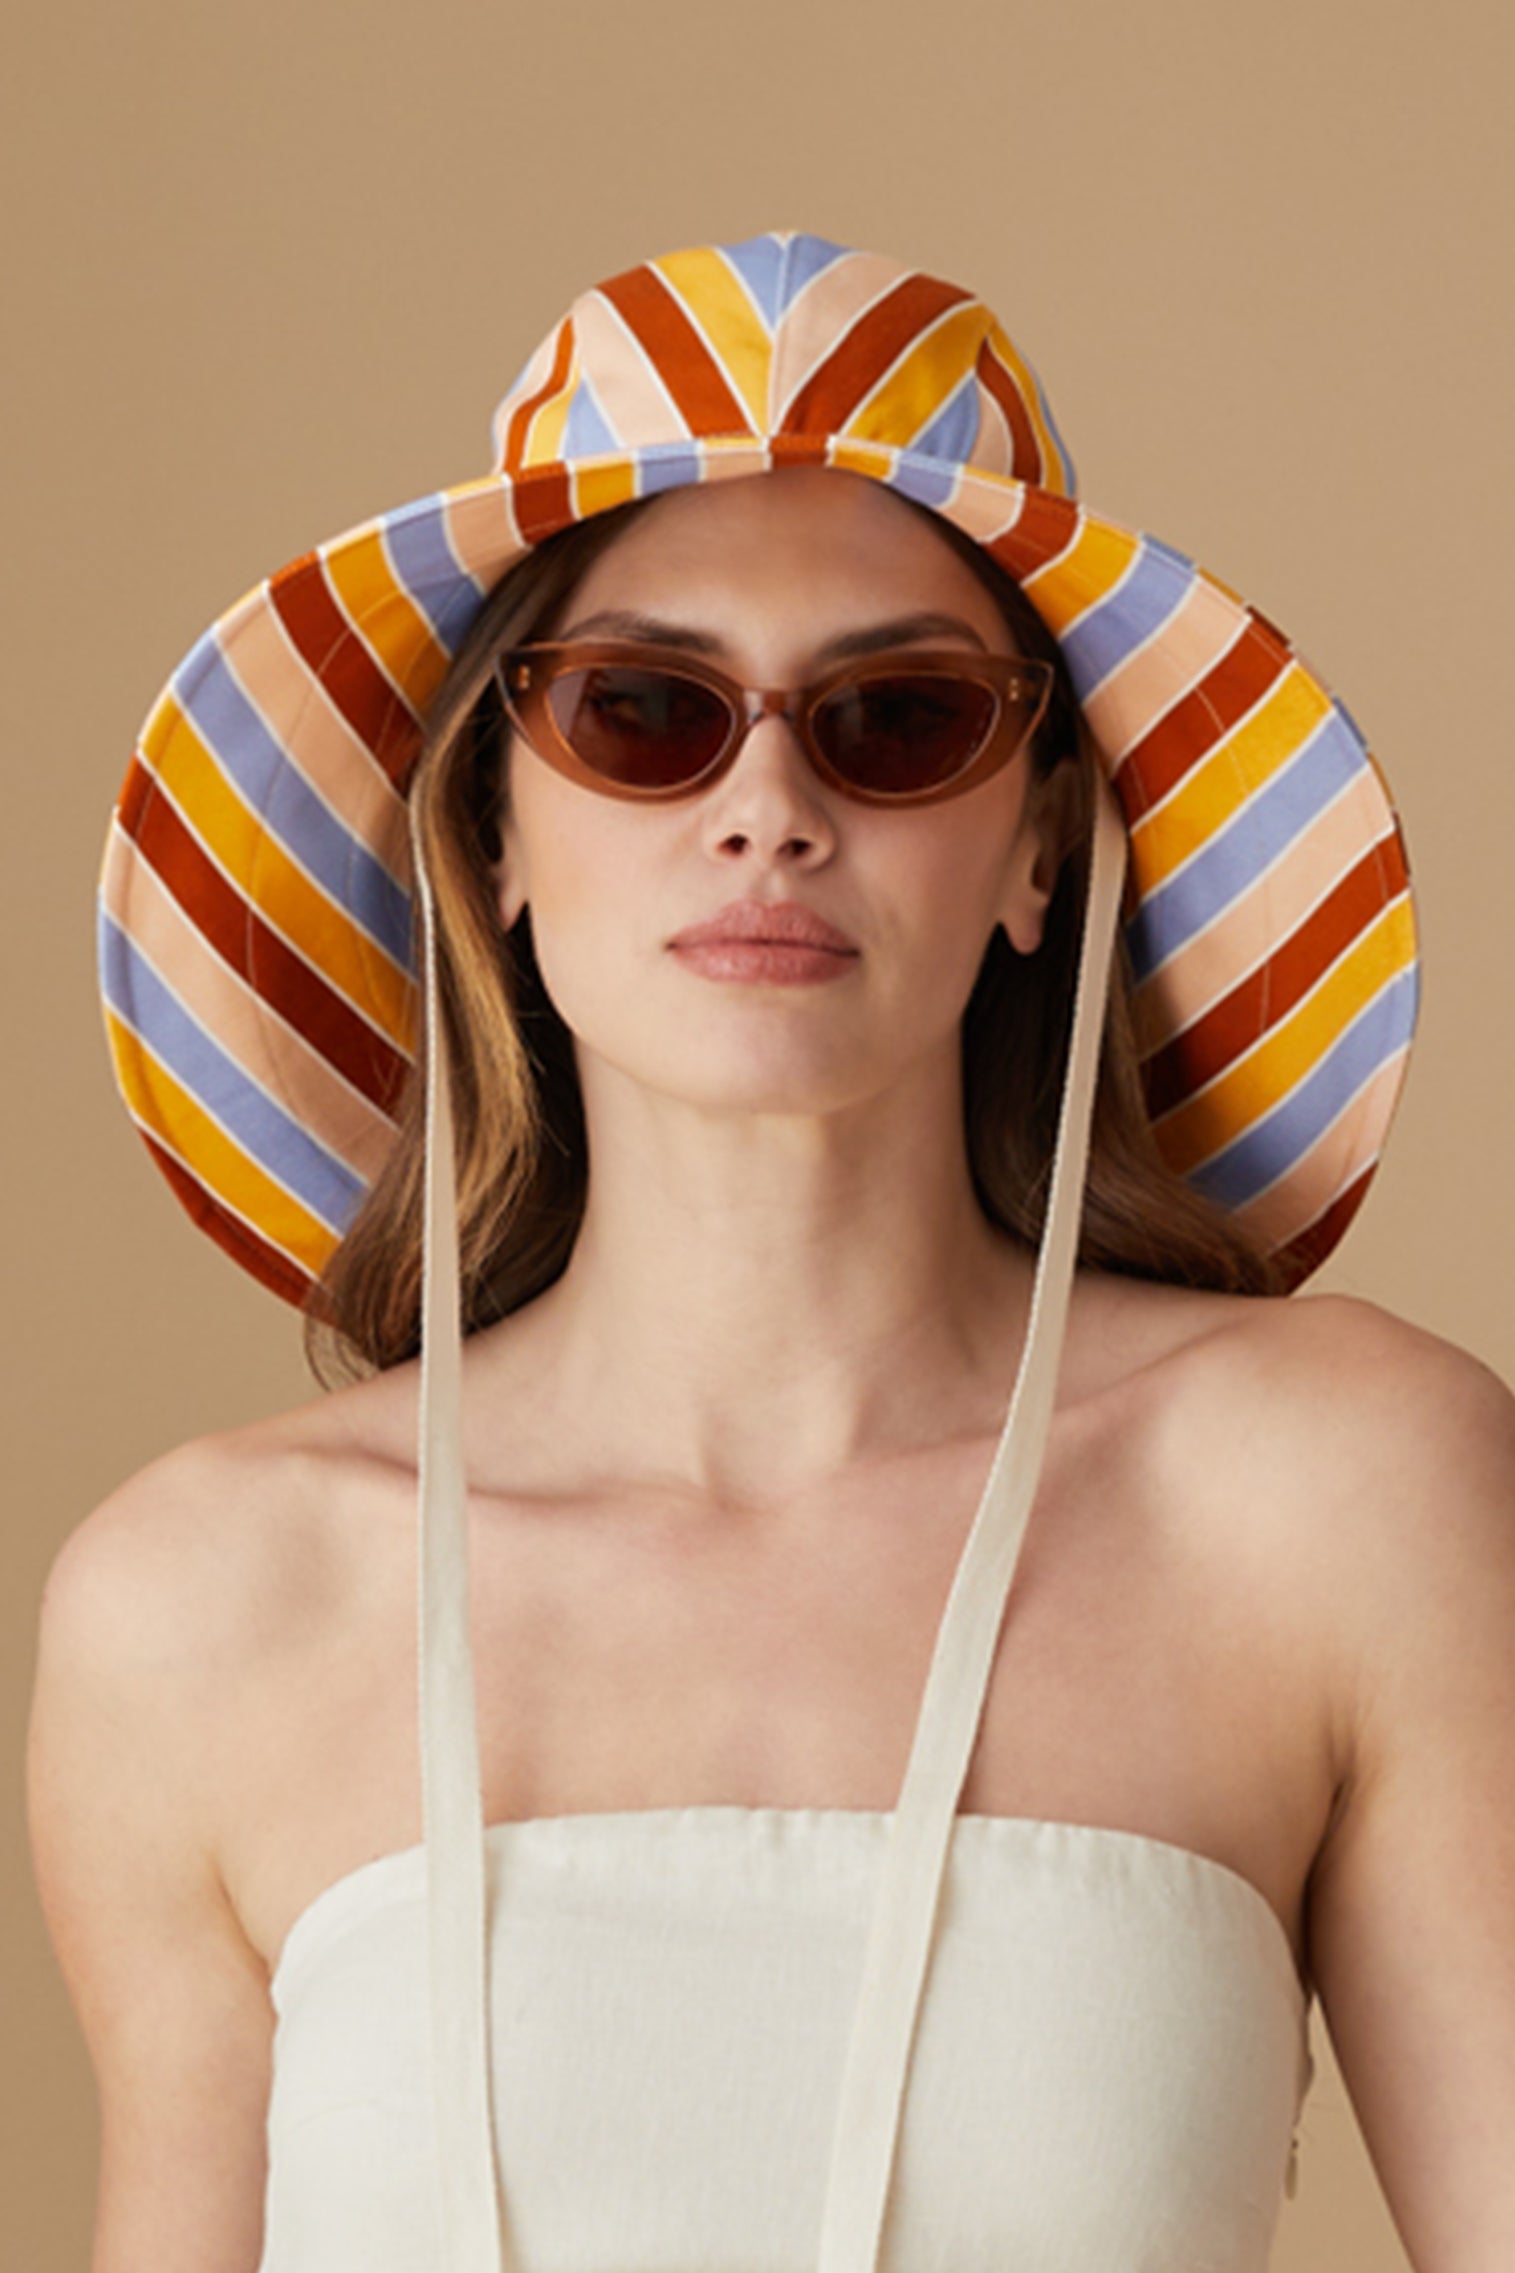 Marlowe Sou'Wester Sun Hat - Panamas, Straw and Sun Hats for Women - Lock & Co. Hatters London UK